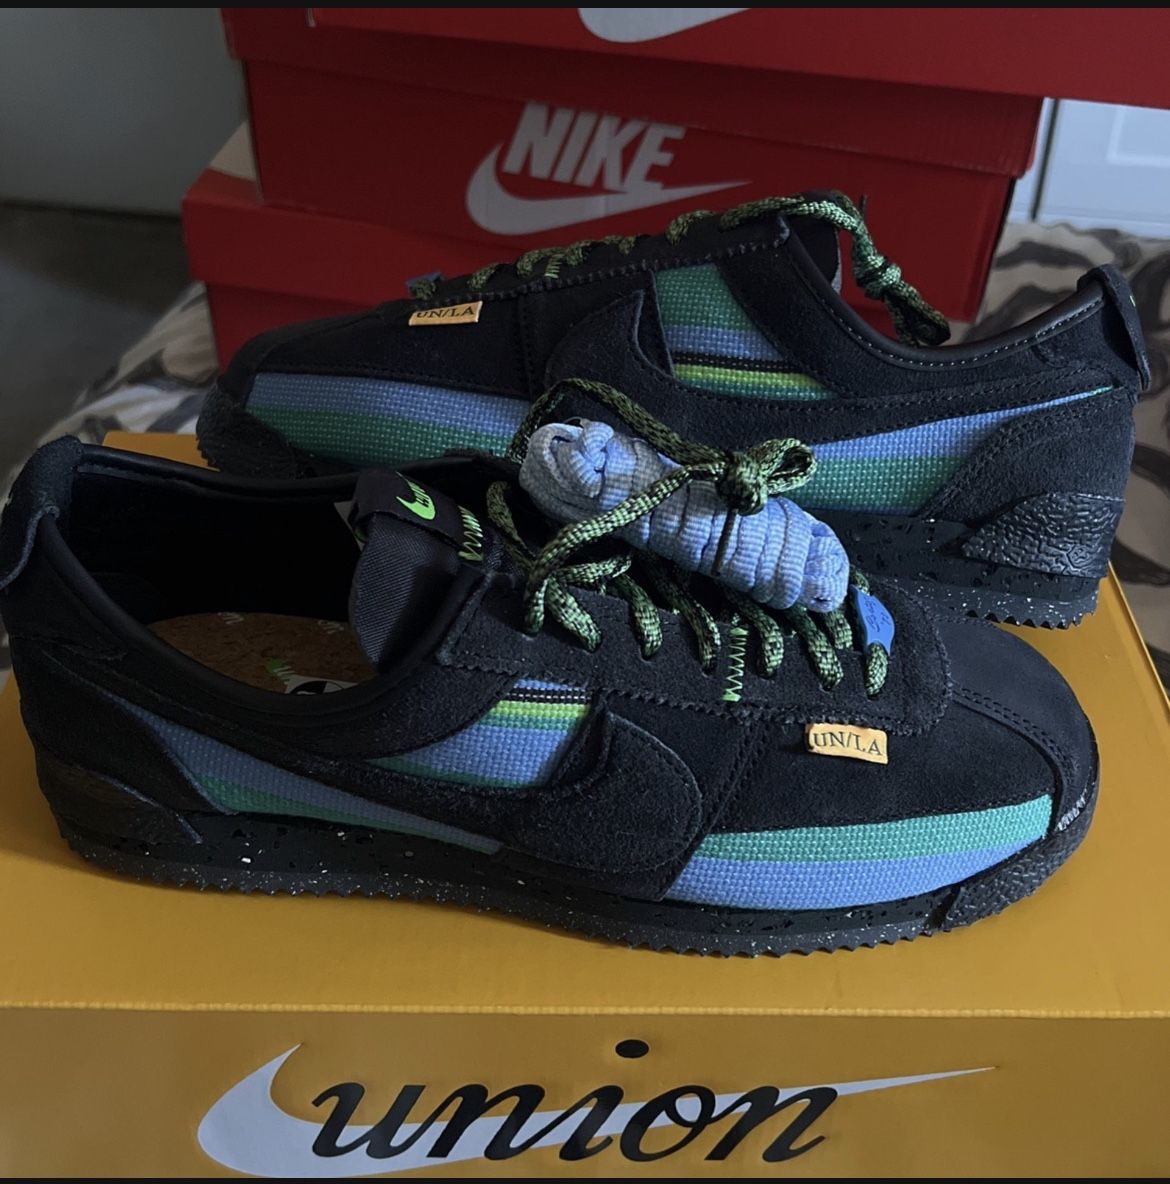   Nike x Union Cortez Off Noir $160/obo